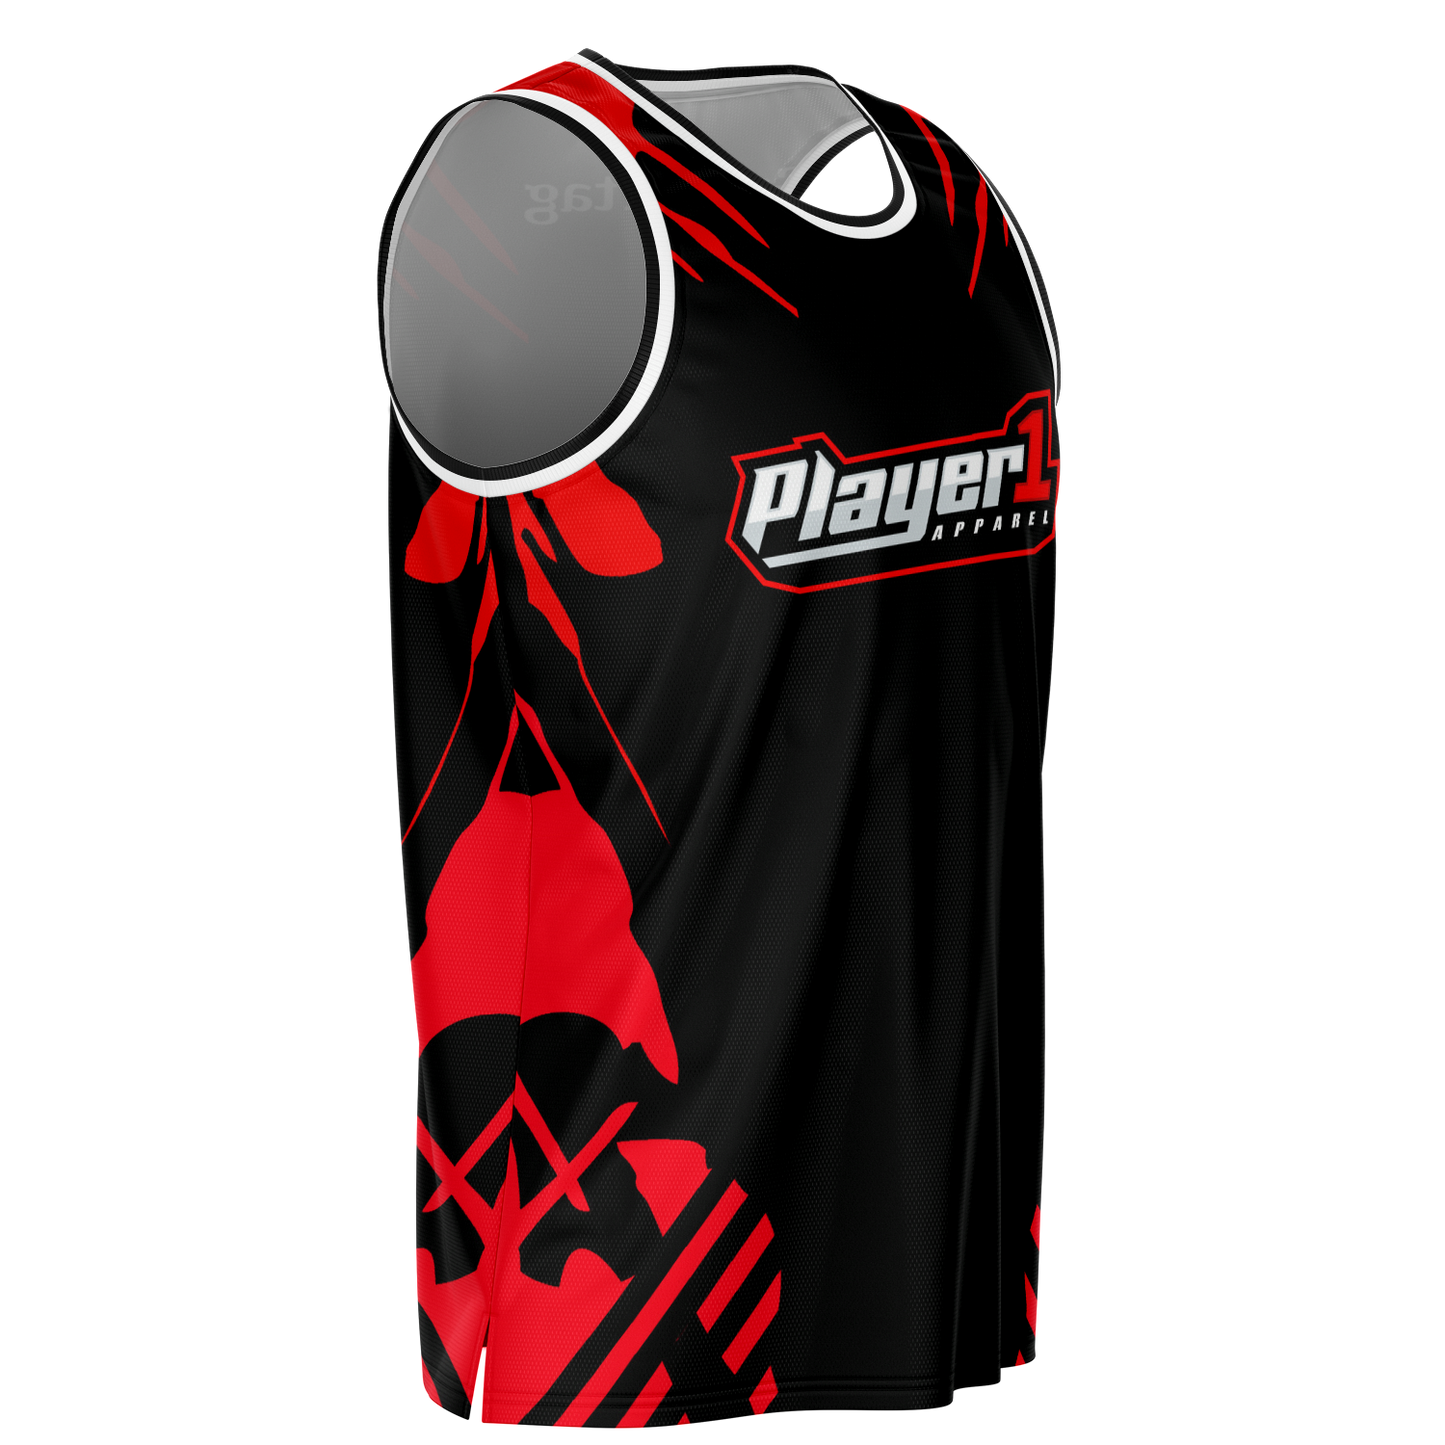 Player1Apparel Basketball Jersey